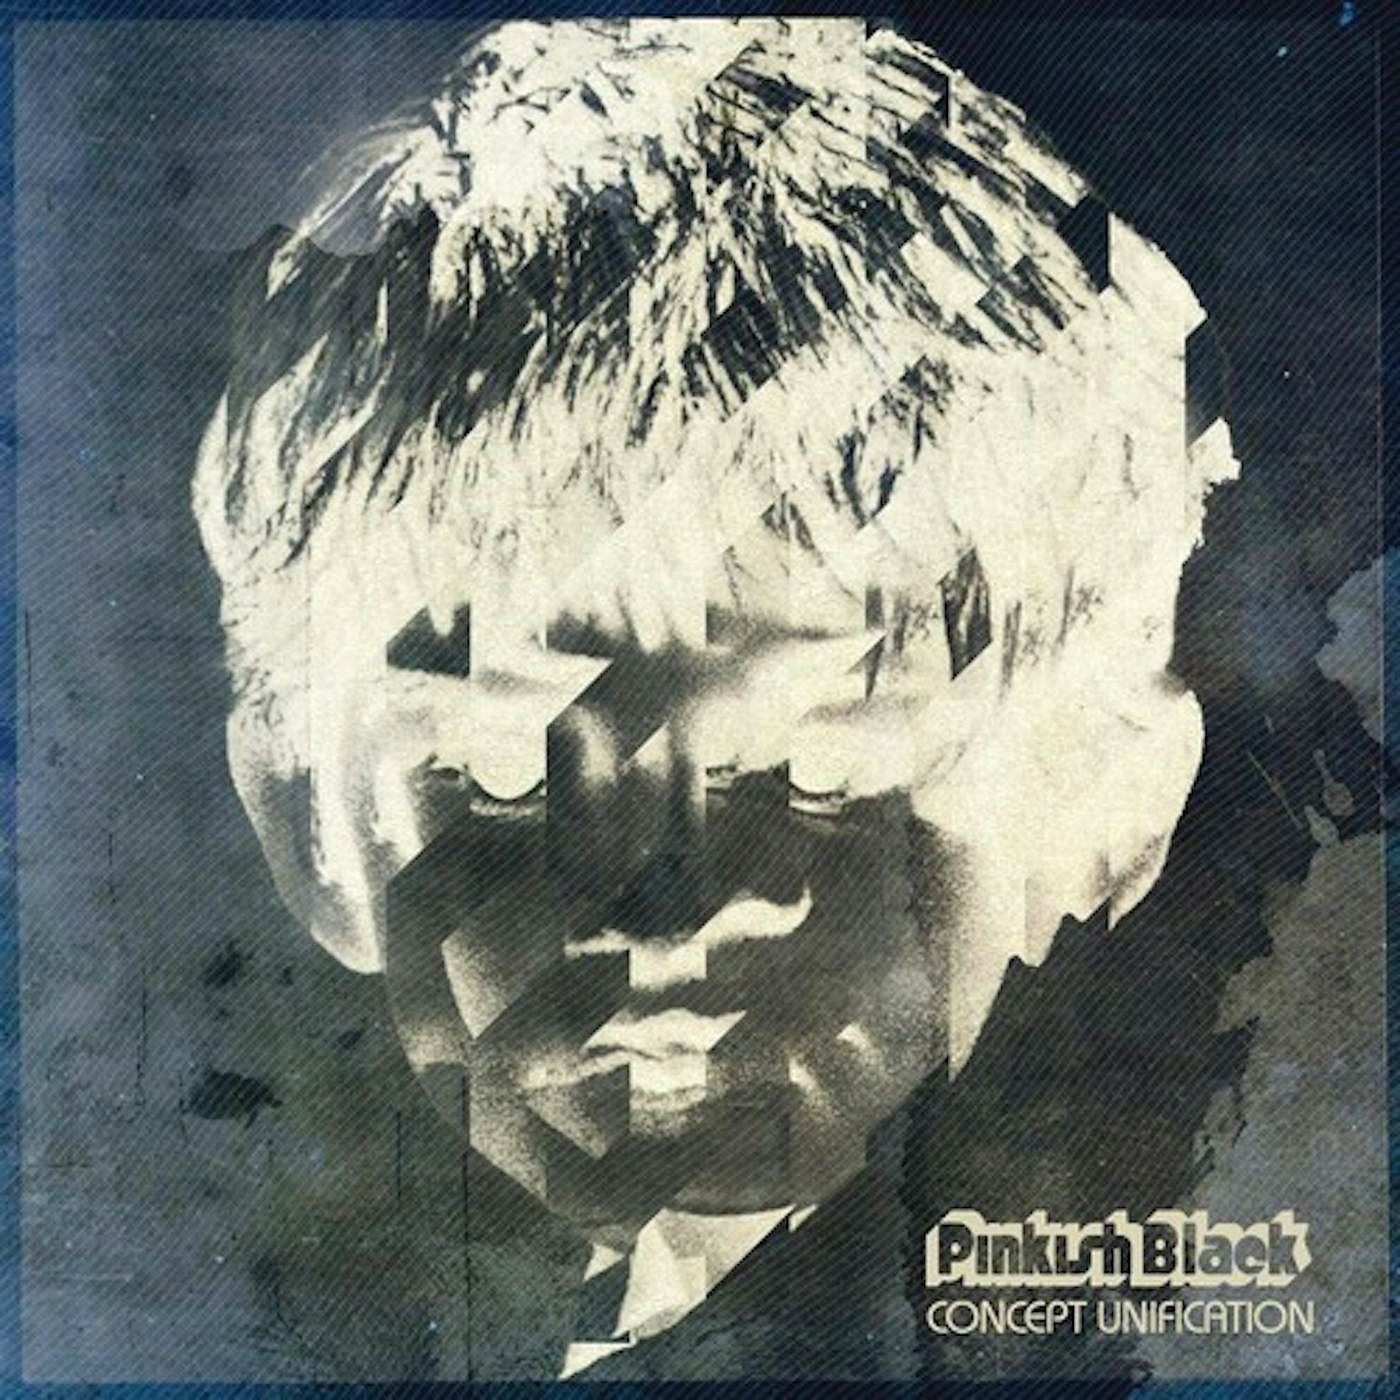 Pinkish Black Concept Unification Vinyl Record